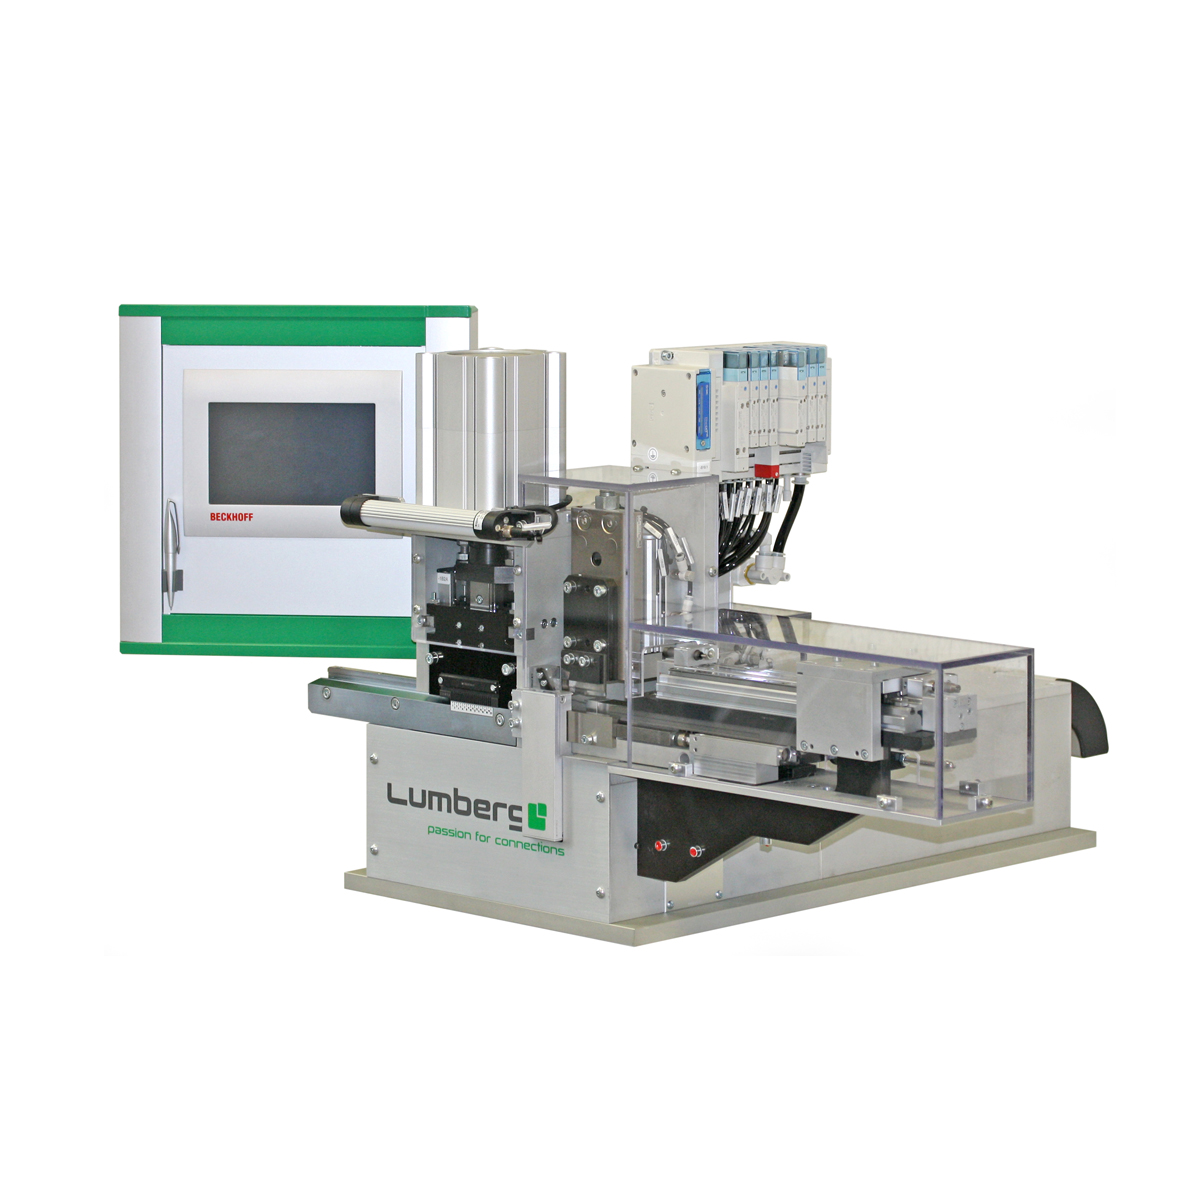 Lumberg: HA35e-RK (Series 97 | Tools and harnessing machines)